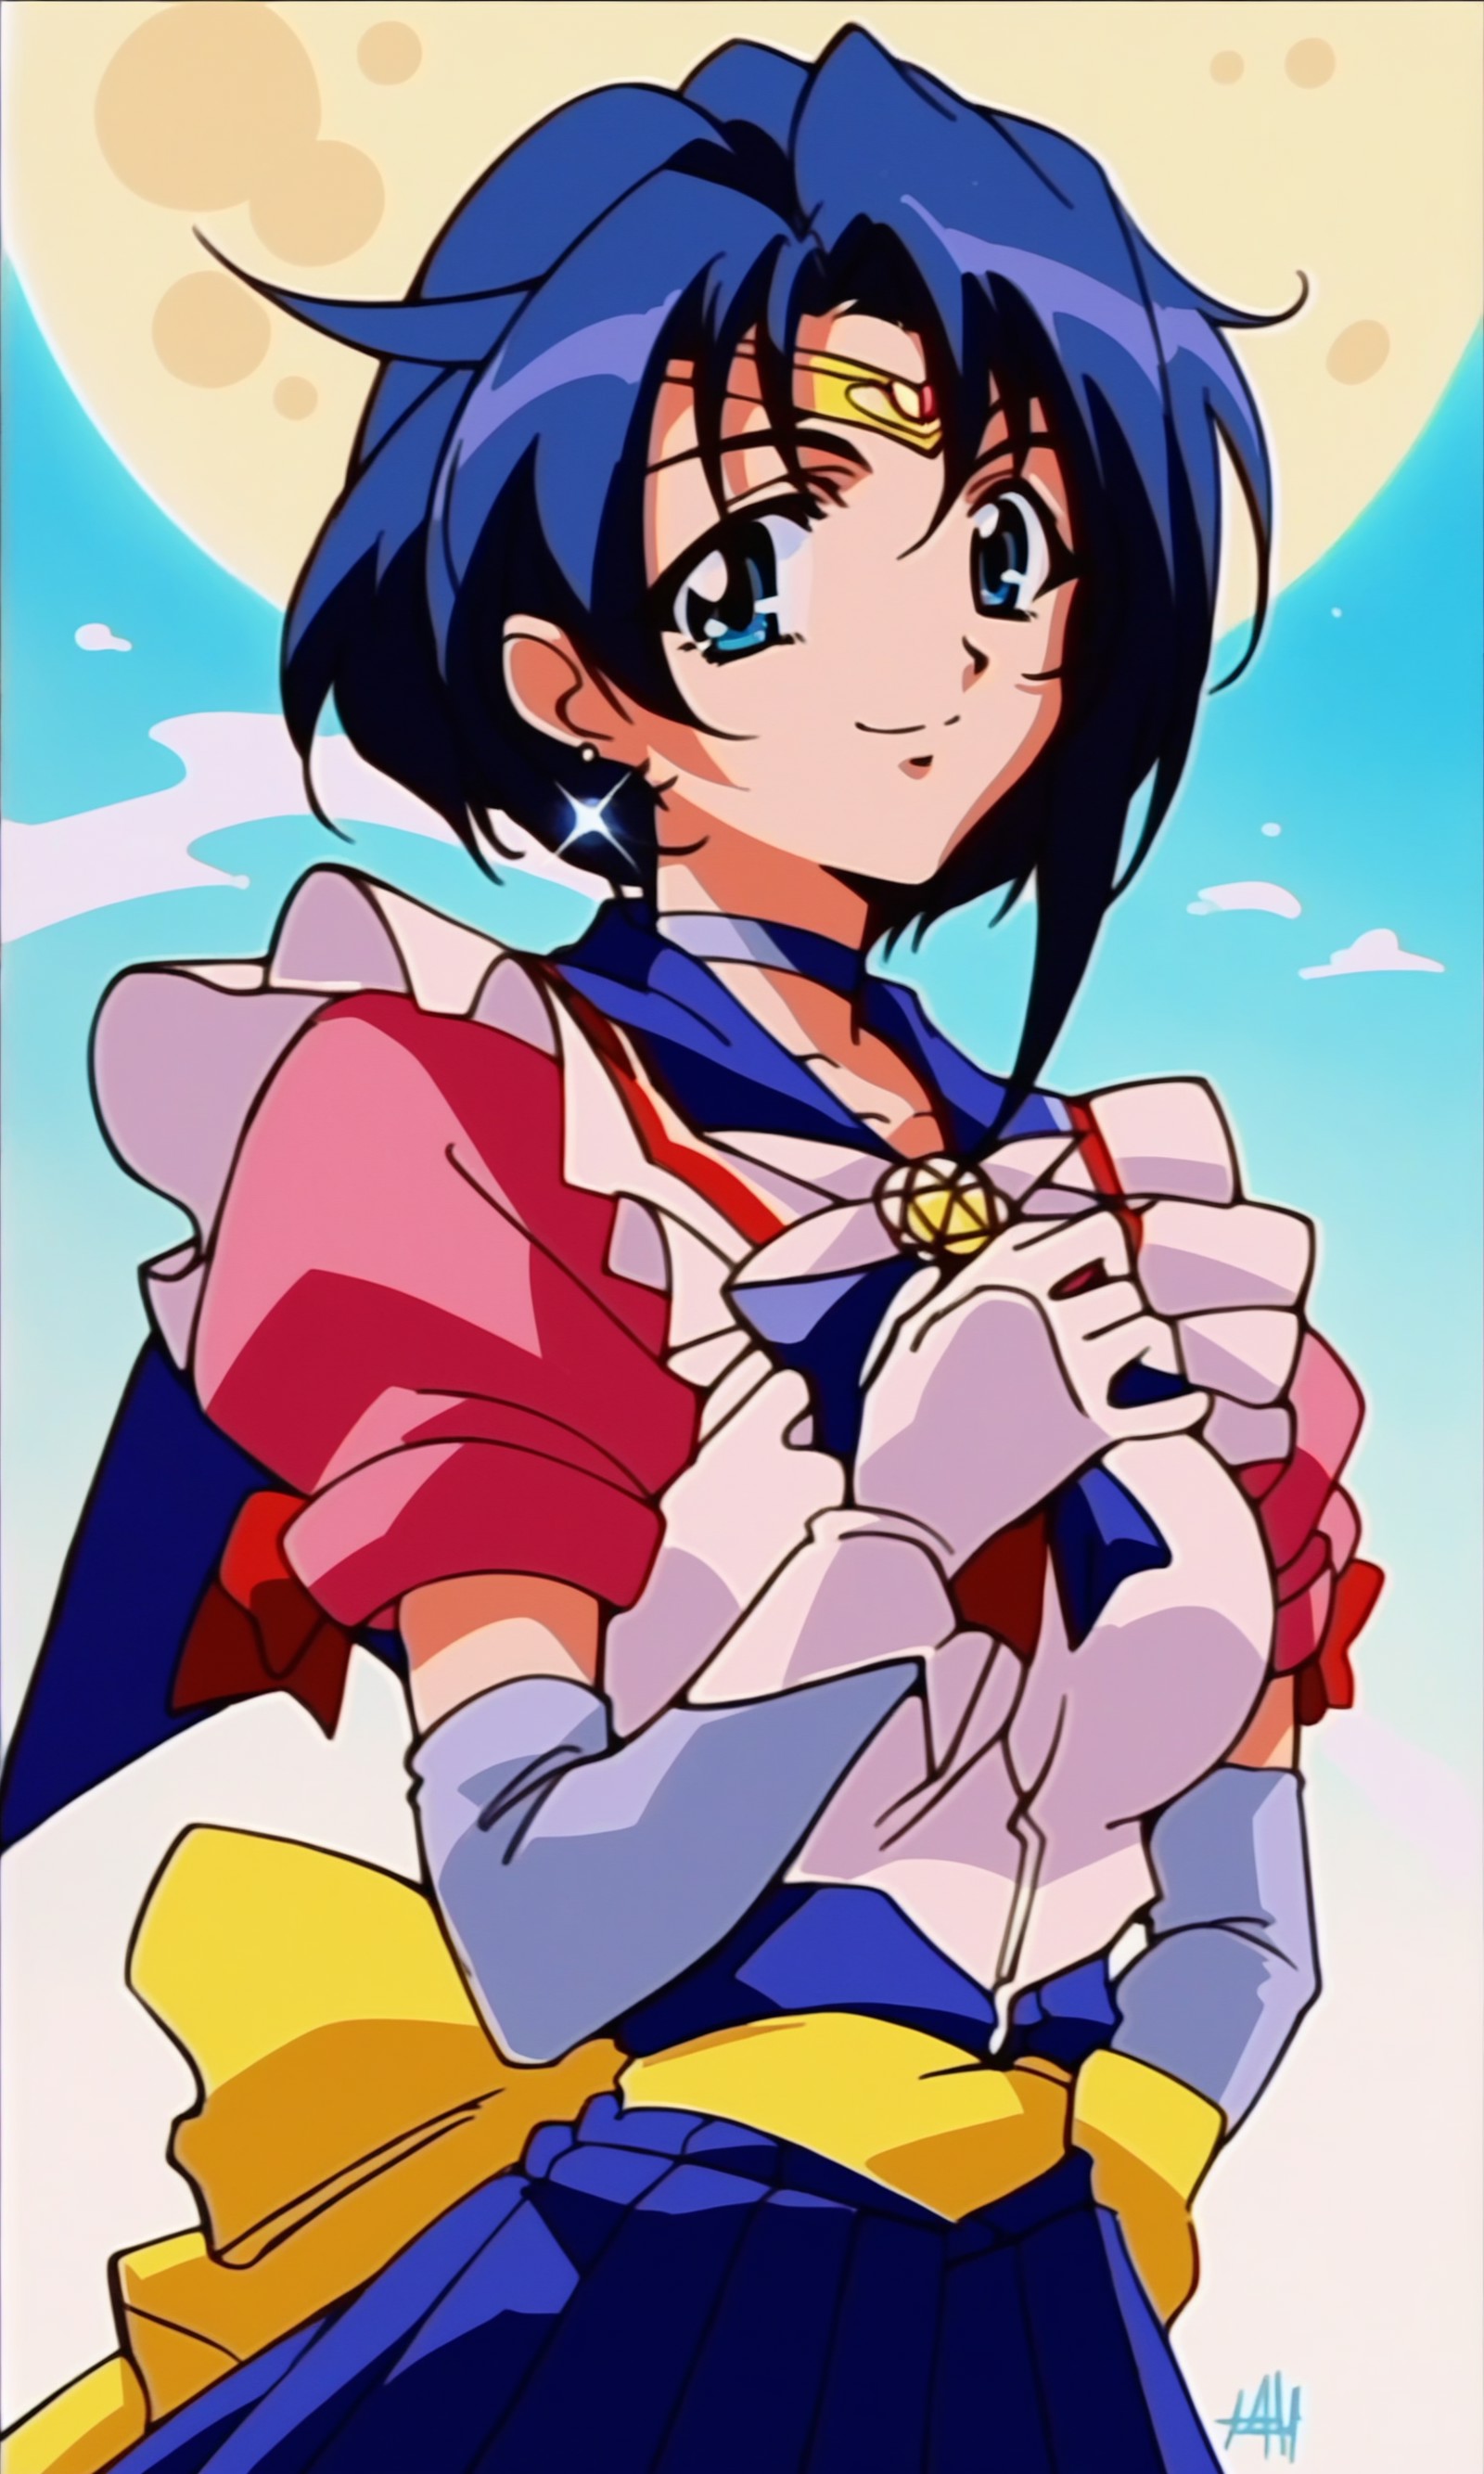 (score_9,score_8_up,score_7_up),source_anime,
1990s anime,1girl,solo,sailor senshi uniform,gloves,magical girl,blue eyes,s...